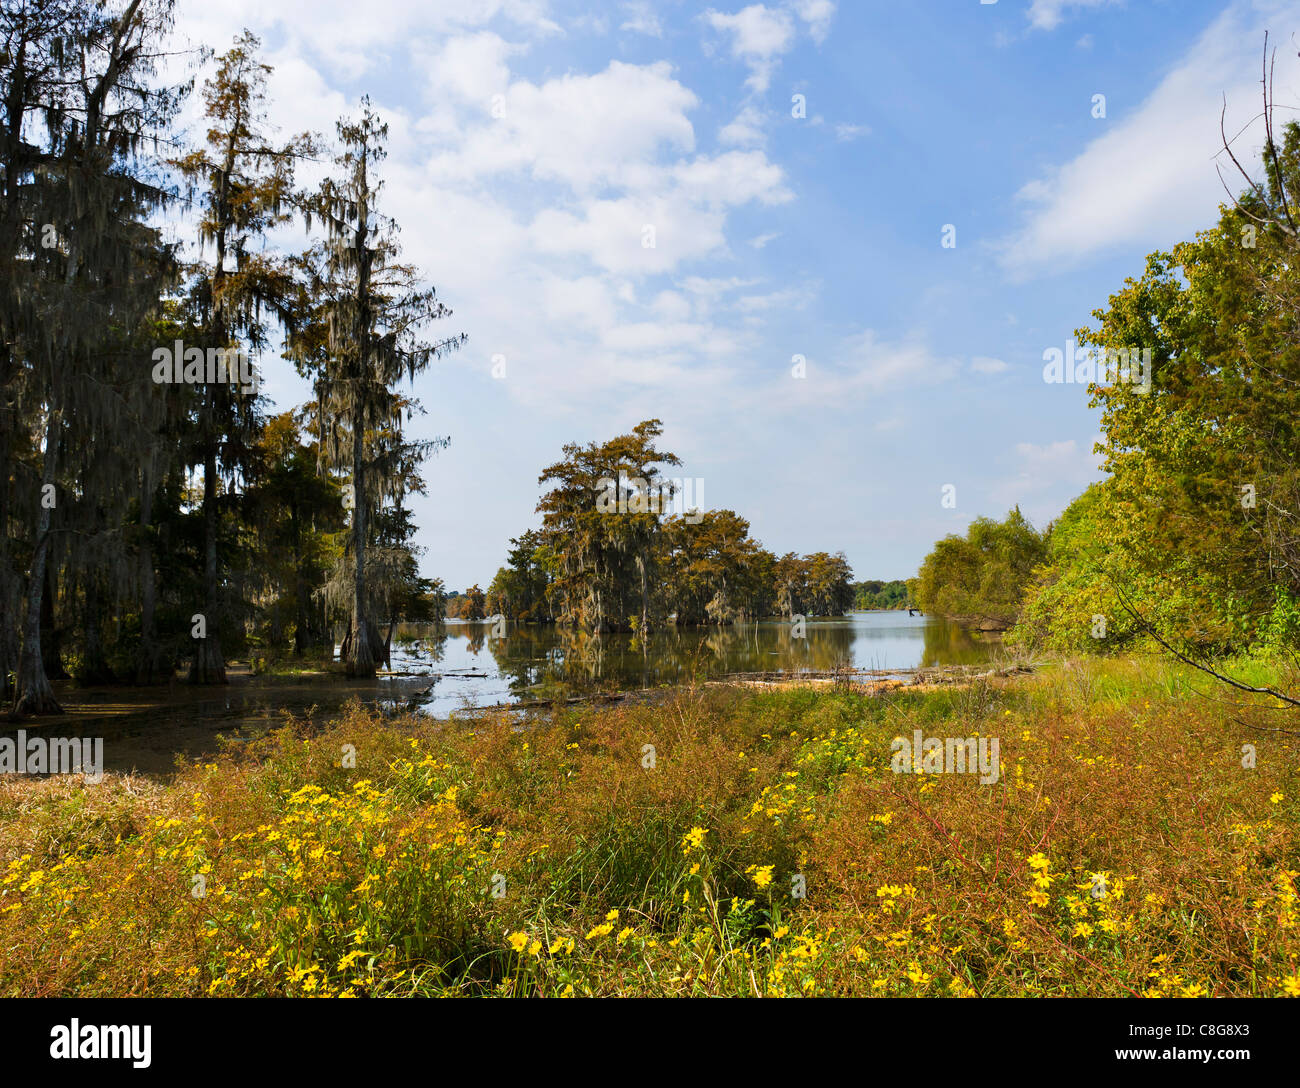 Typical swampland on Lake Martin near Breaux Bridge, Cajun country, Louisiana, USA Stock Photo